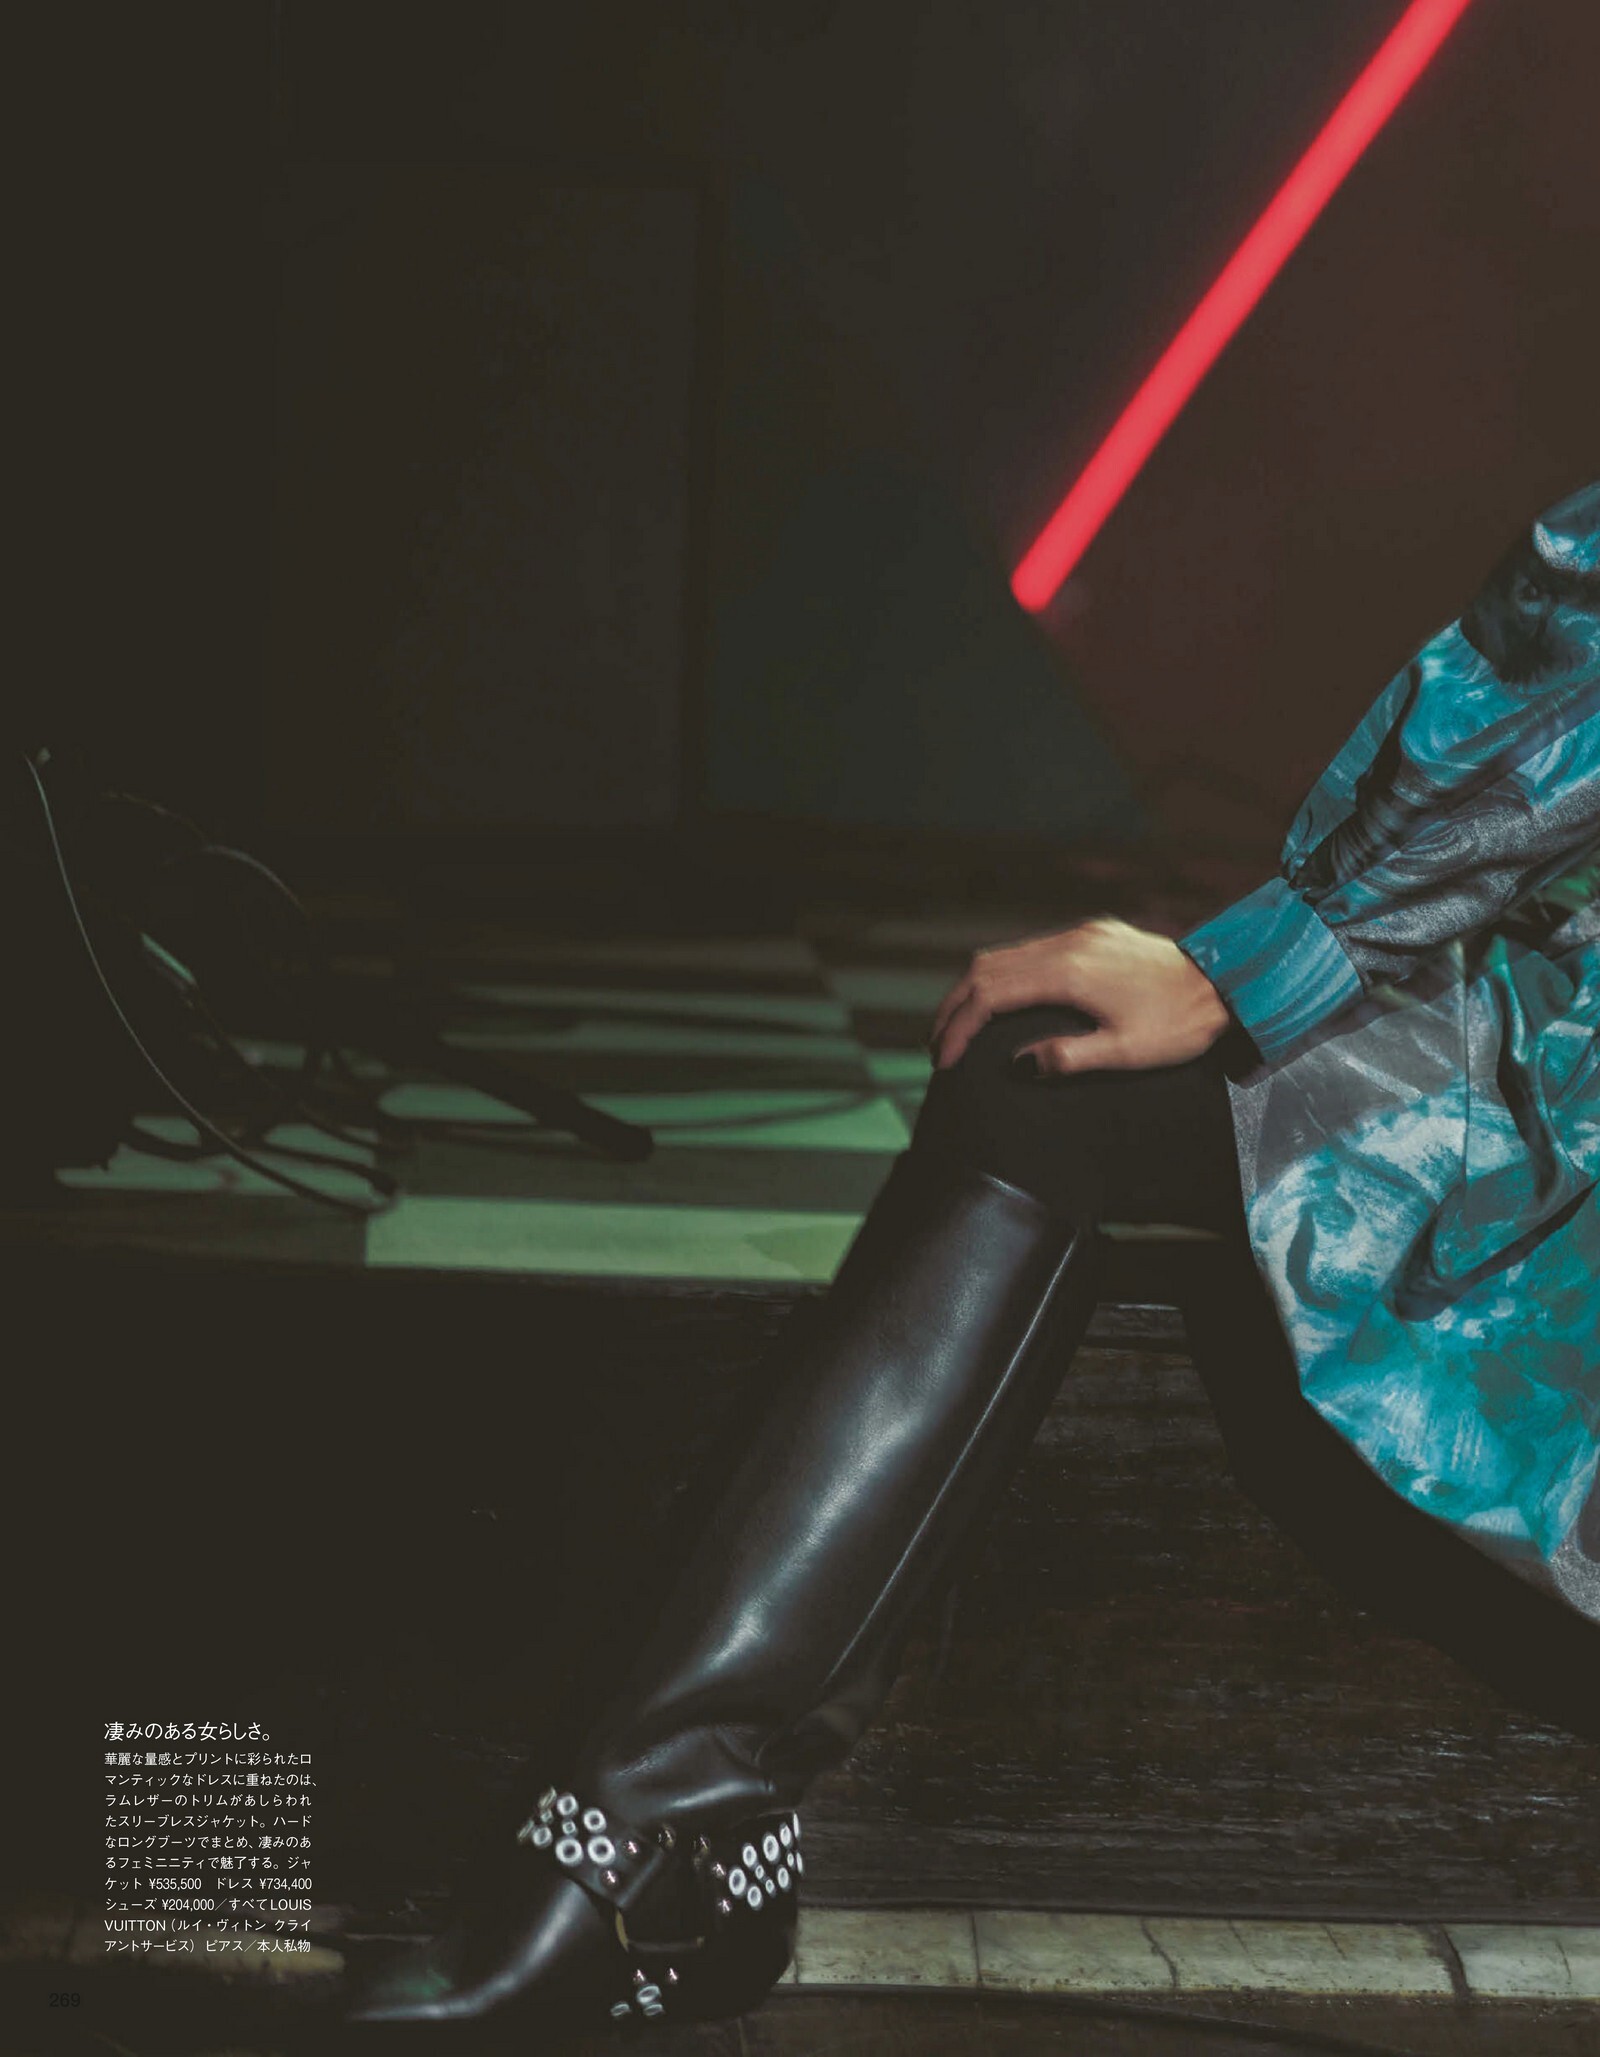 Alicia Vikander Poses For Vogue Magazine October 2019 Japan Edition